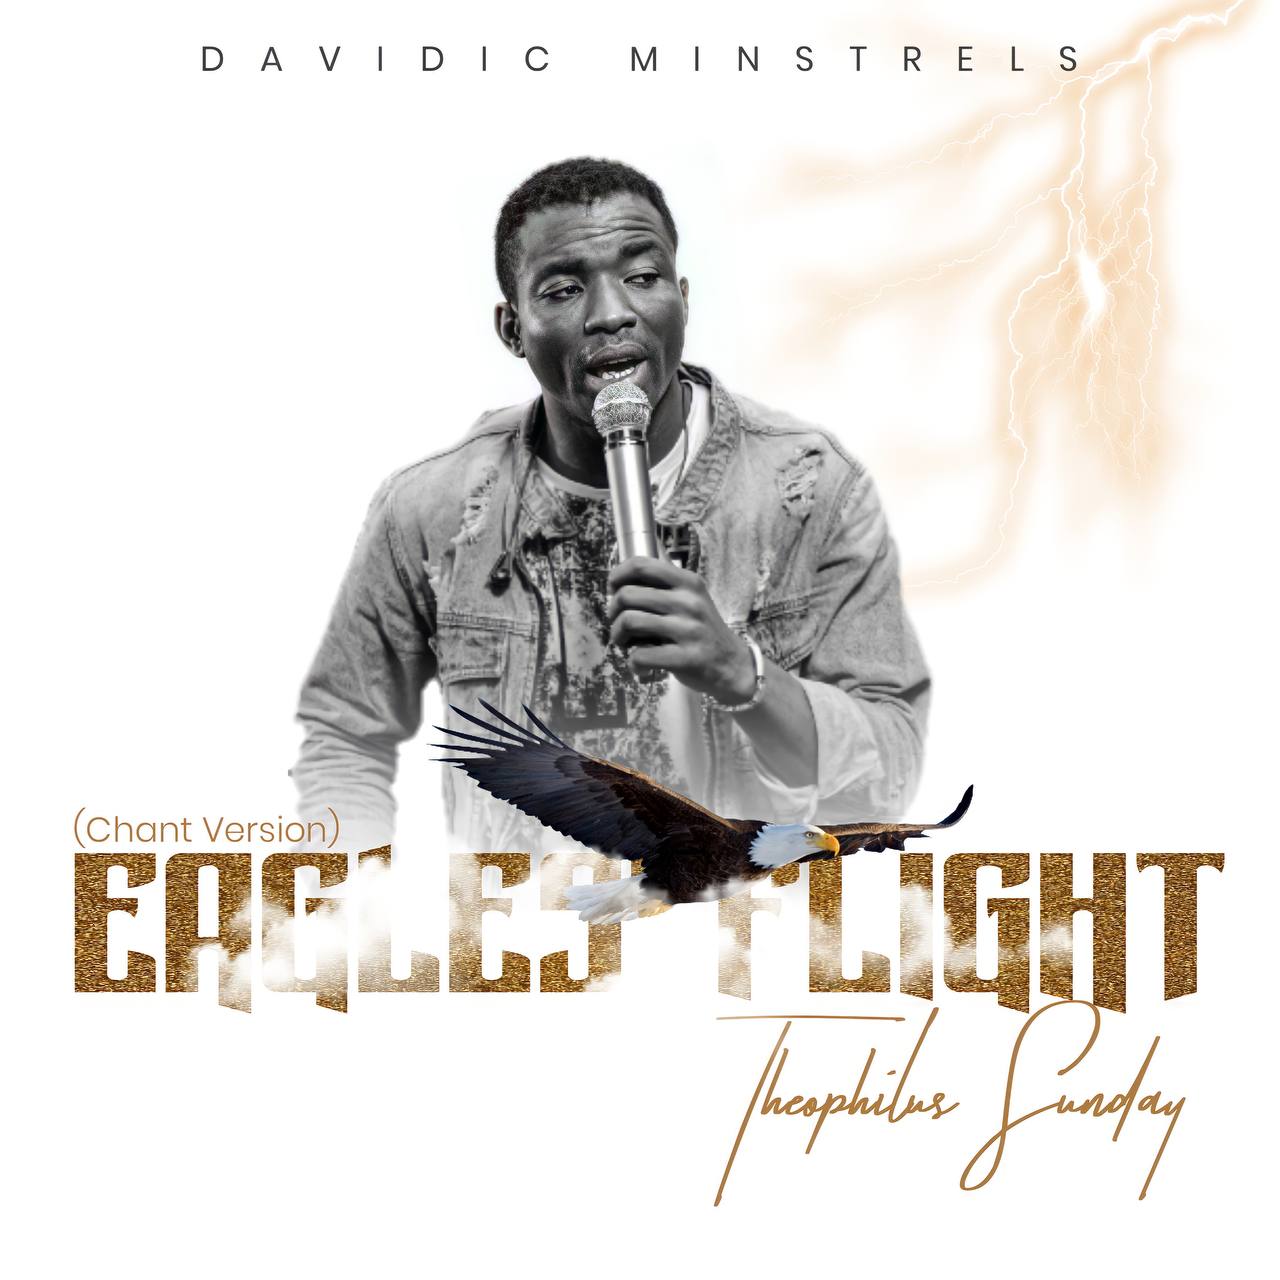 EAGLES FLIGHT Theophilus Sunday Mp3 Download Free (Audio+Lyrics) 16